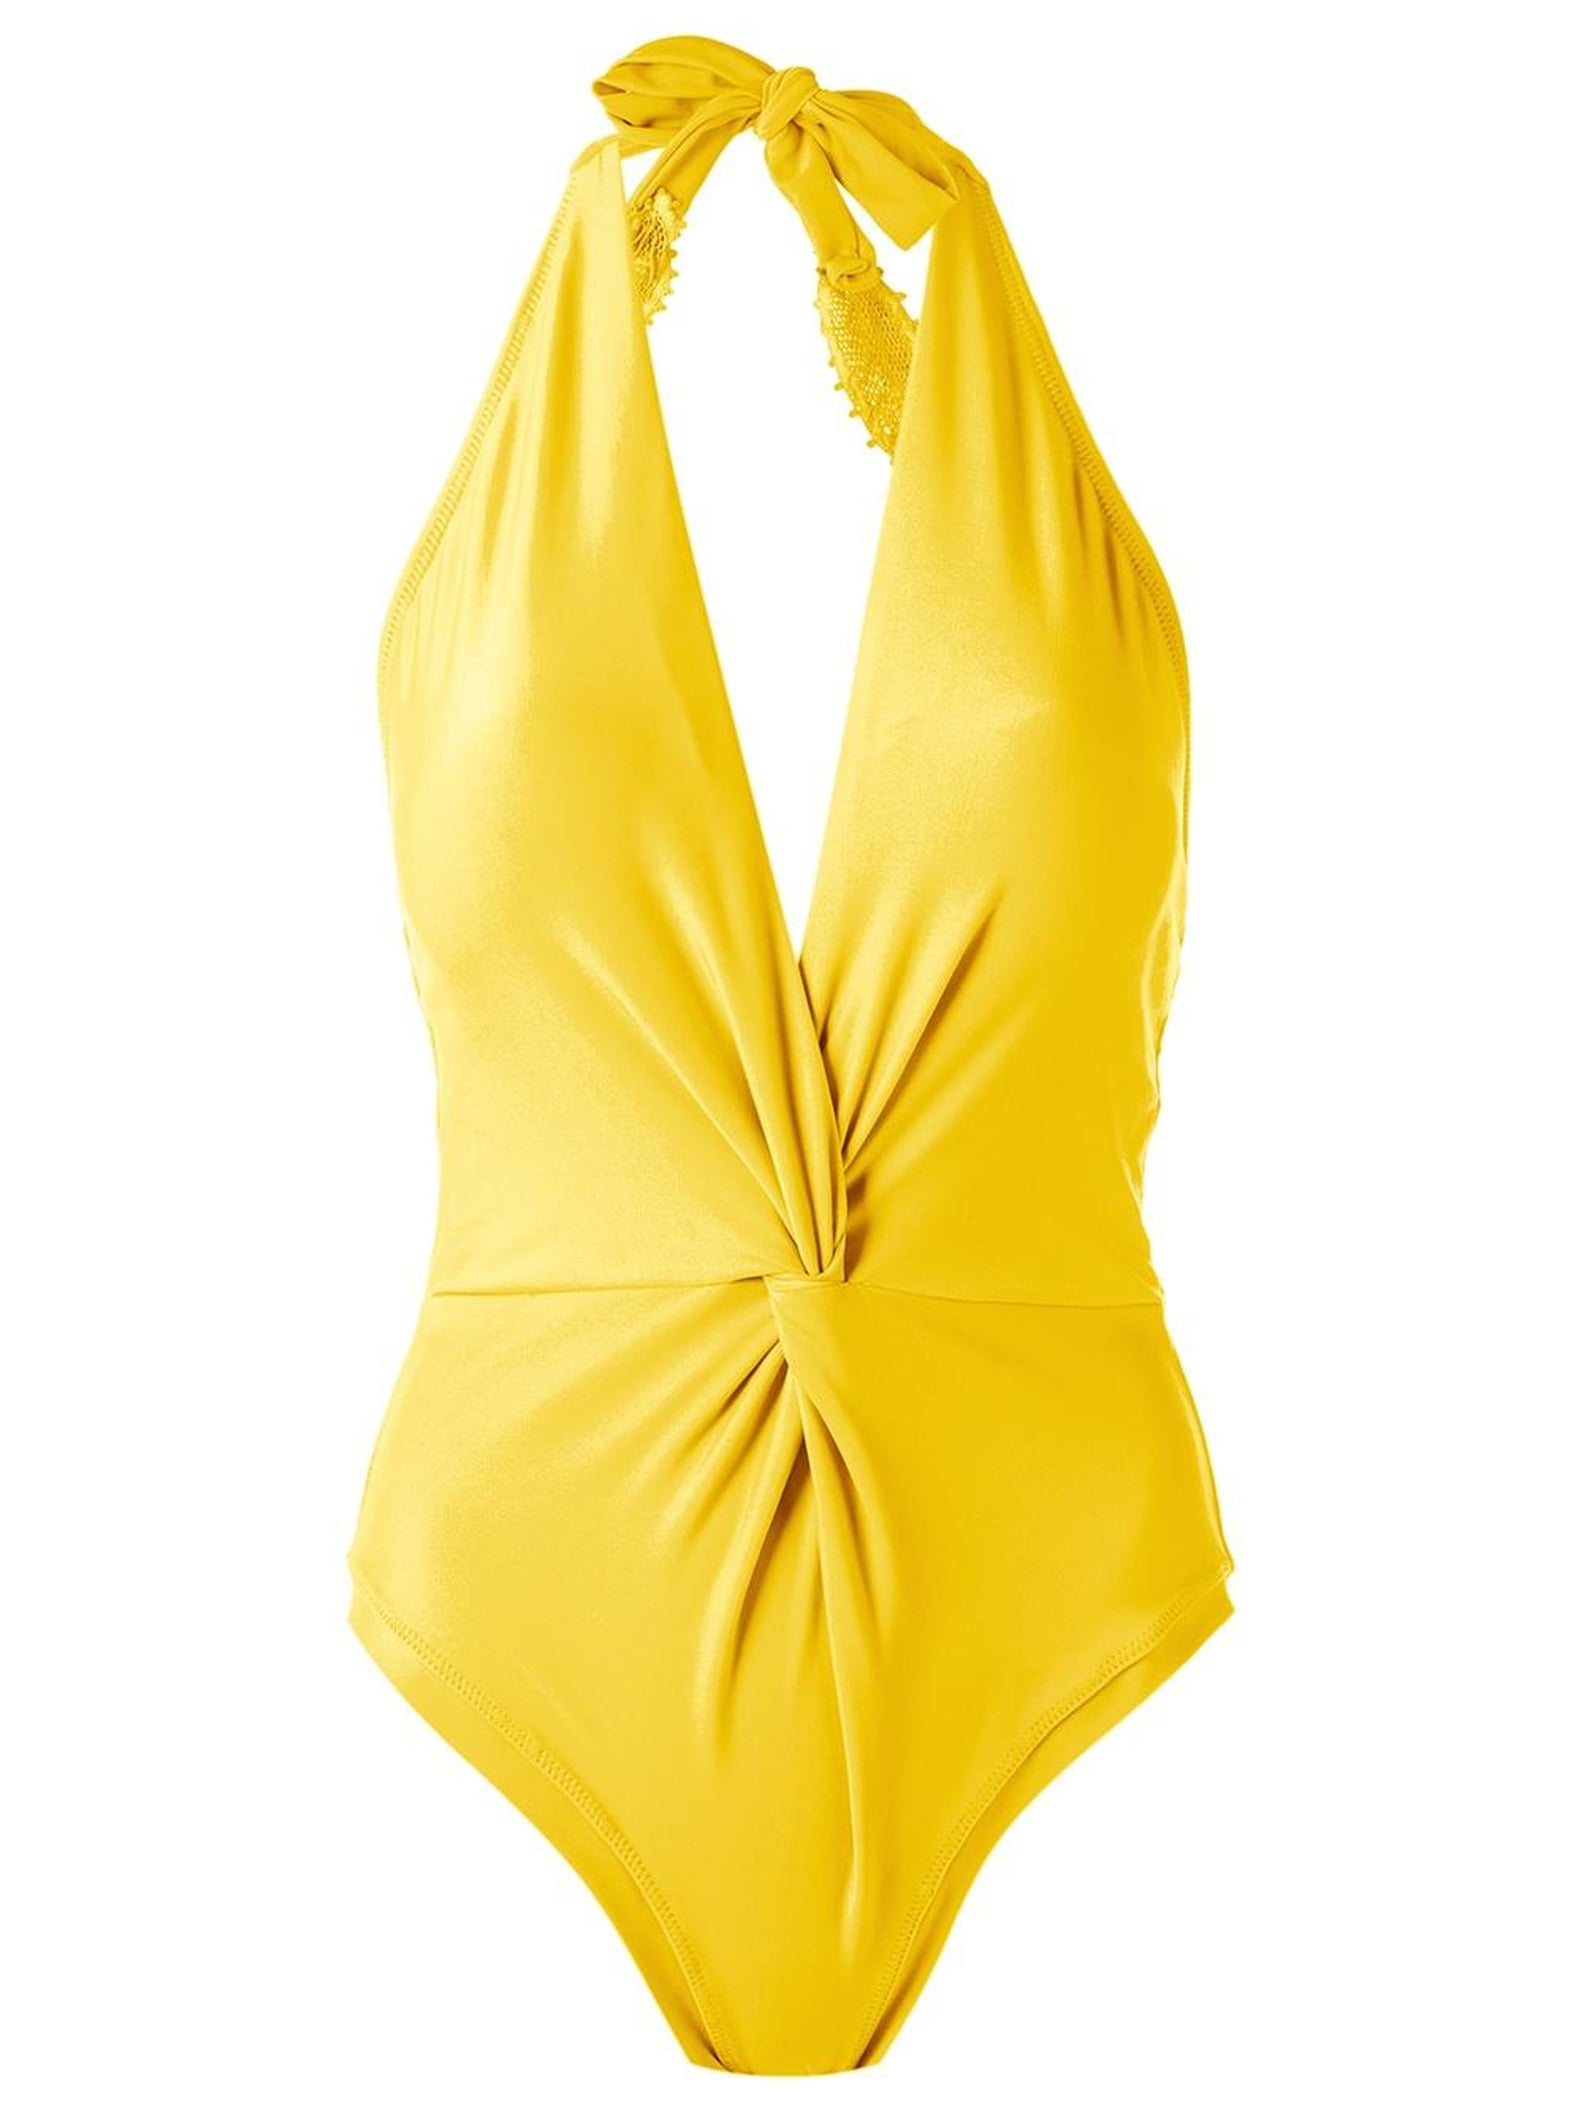 Naomi Watts's Swimsuits in Diana Movie | POPSUGAR Fashion